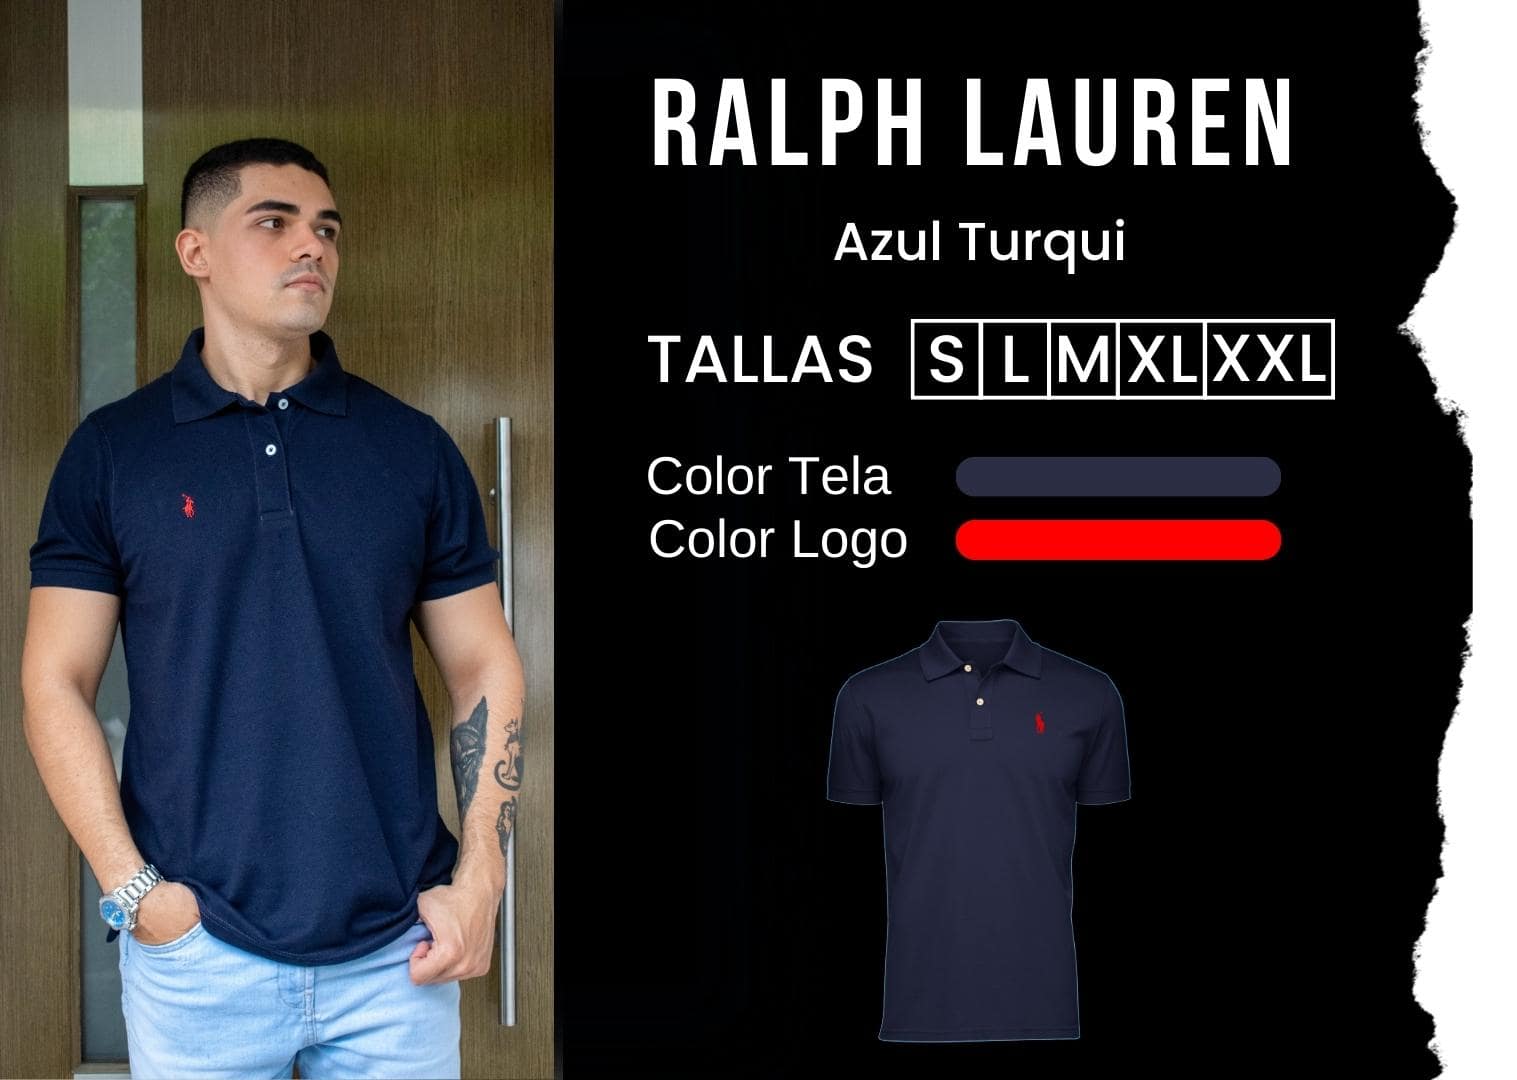 camiseta Ralph Lauren polo hombre tienda olevan color azul turqui